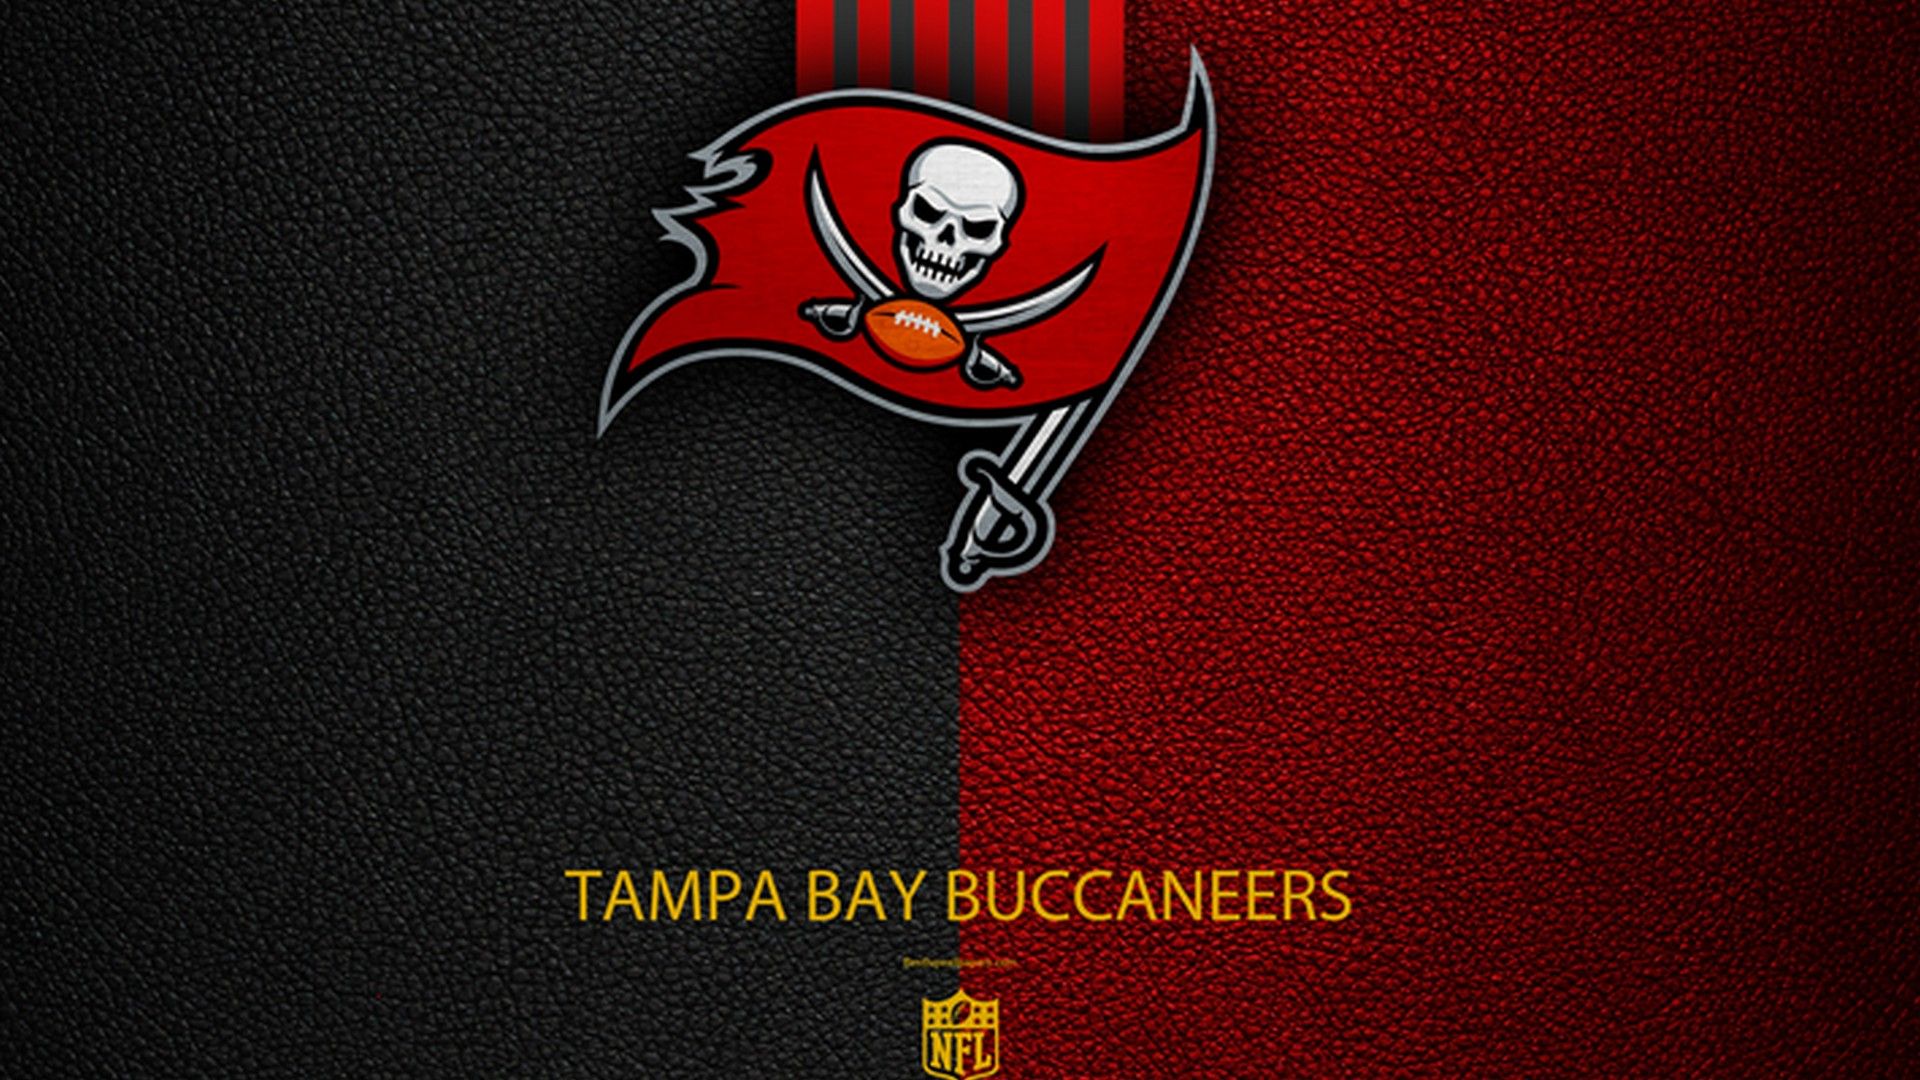 Tampa Bay Buccaneers Wallpaper For Mac .wallpapernfl.com